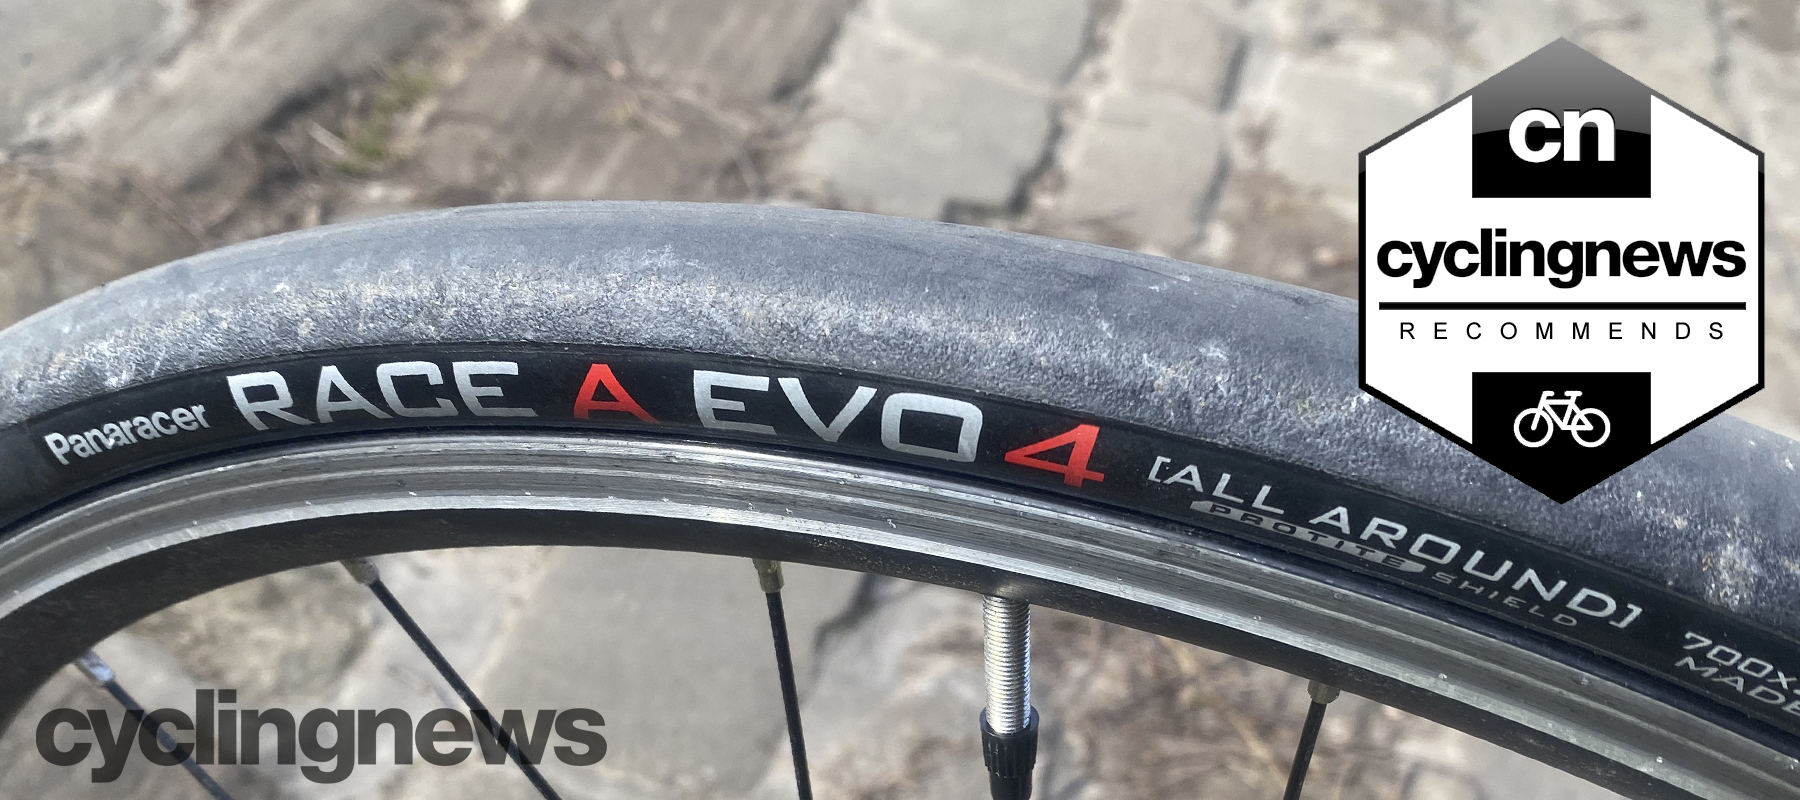 Panaracer Race A Evo 4 28mm tyre review | Cyclingnews